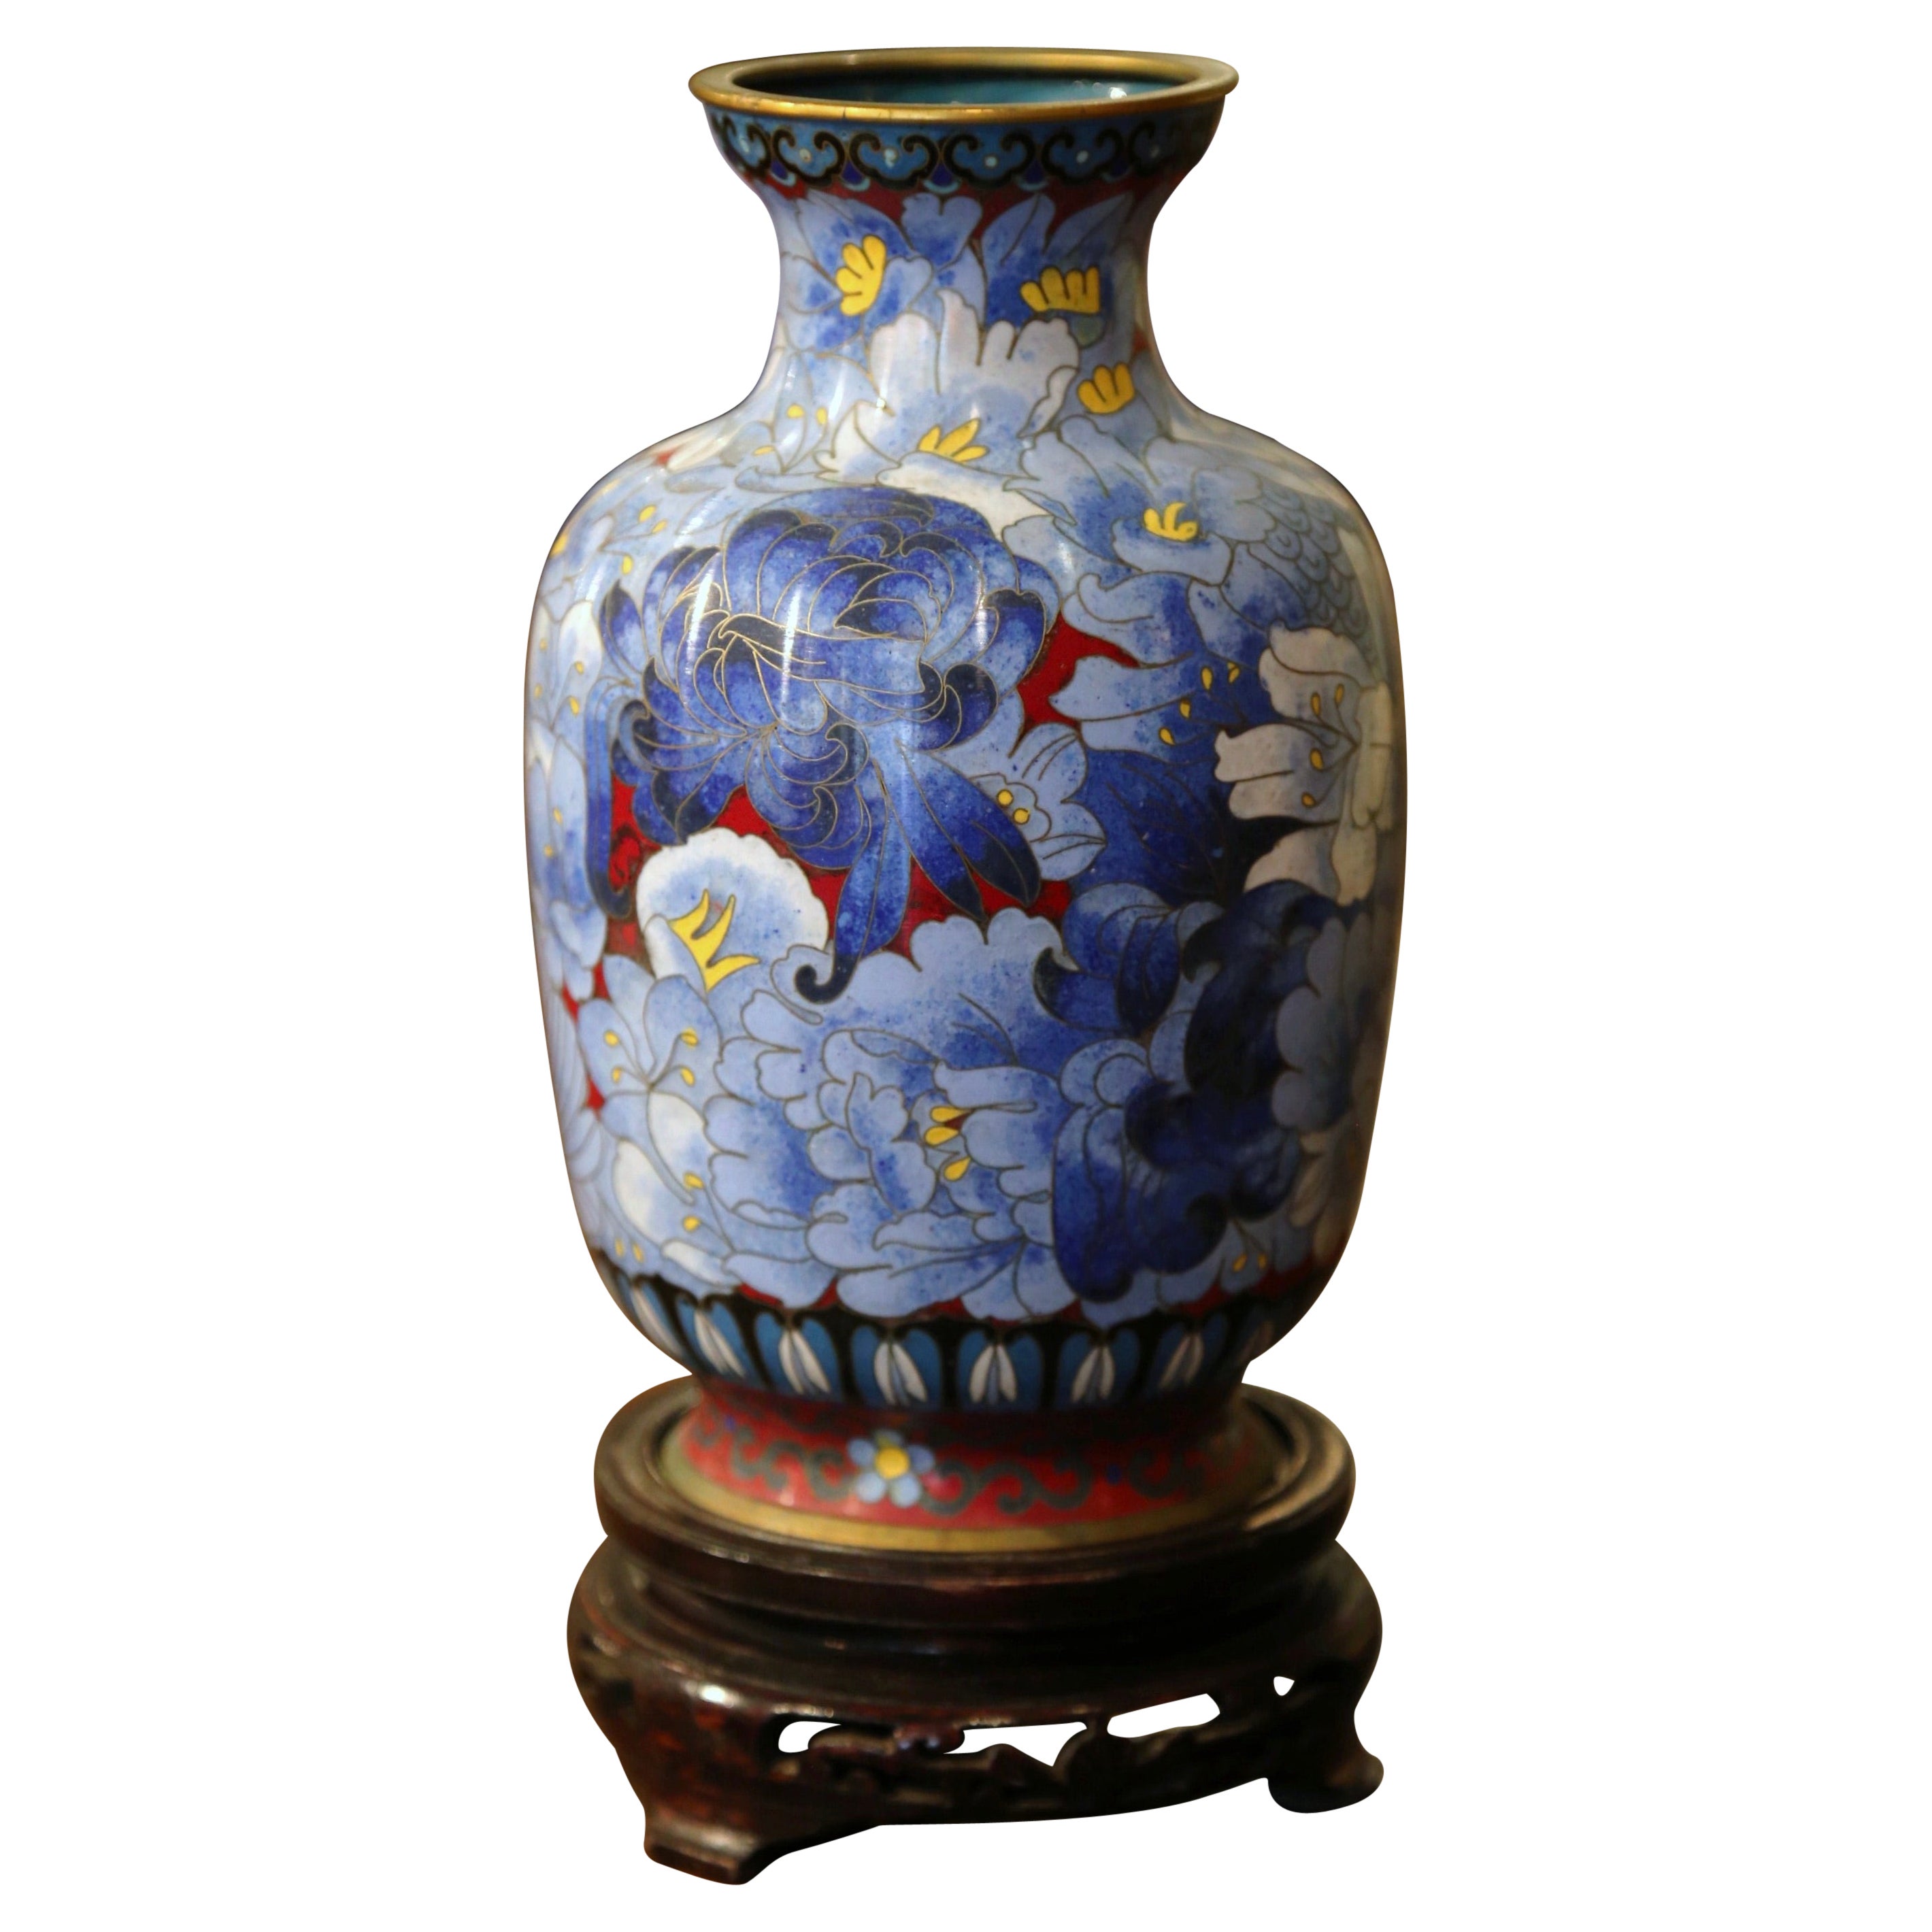  Vintage Chinese Cloisonne Champleve Enamel Vase with Floral Motifs